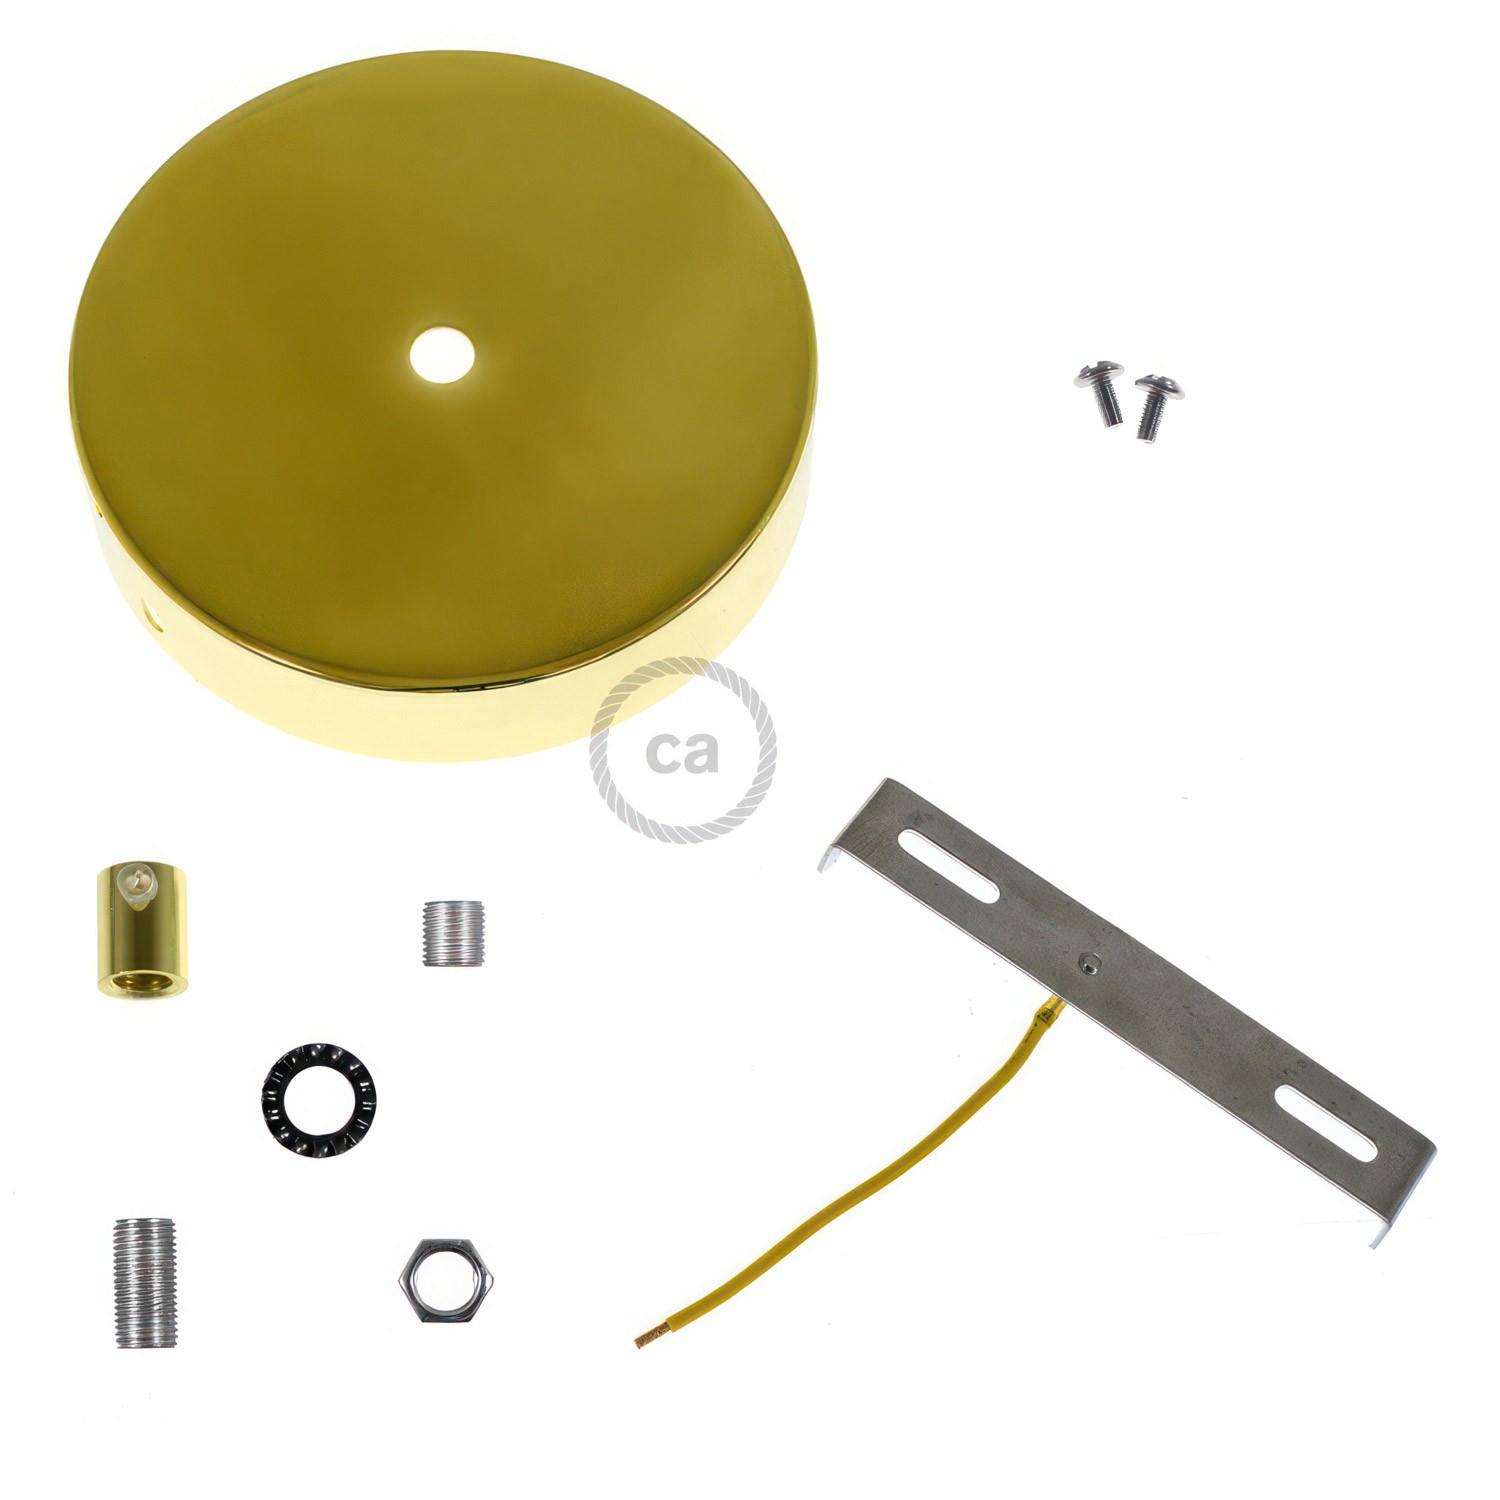 Zylindrischer Lampenbaldachin Kit aus Metall